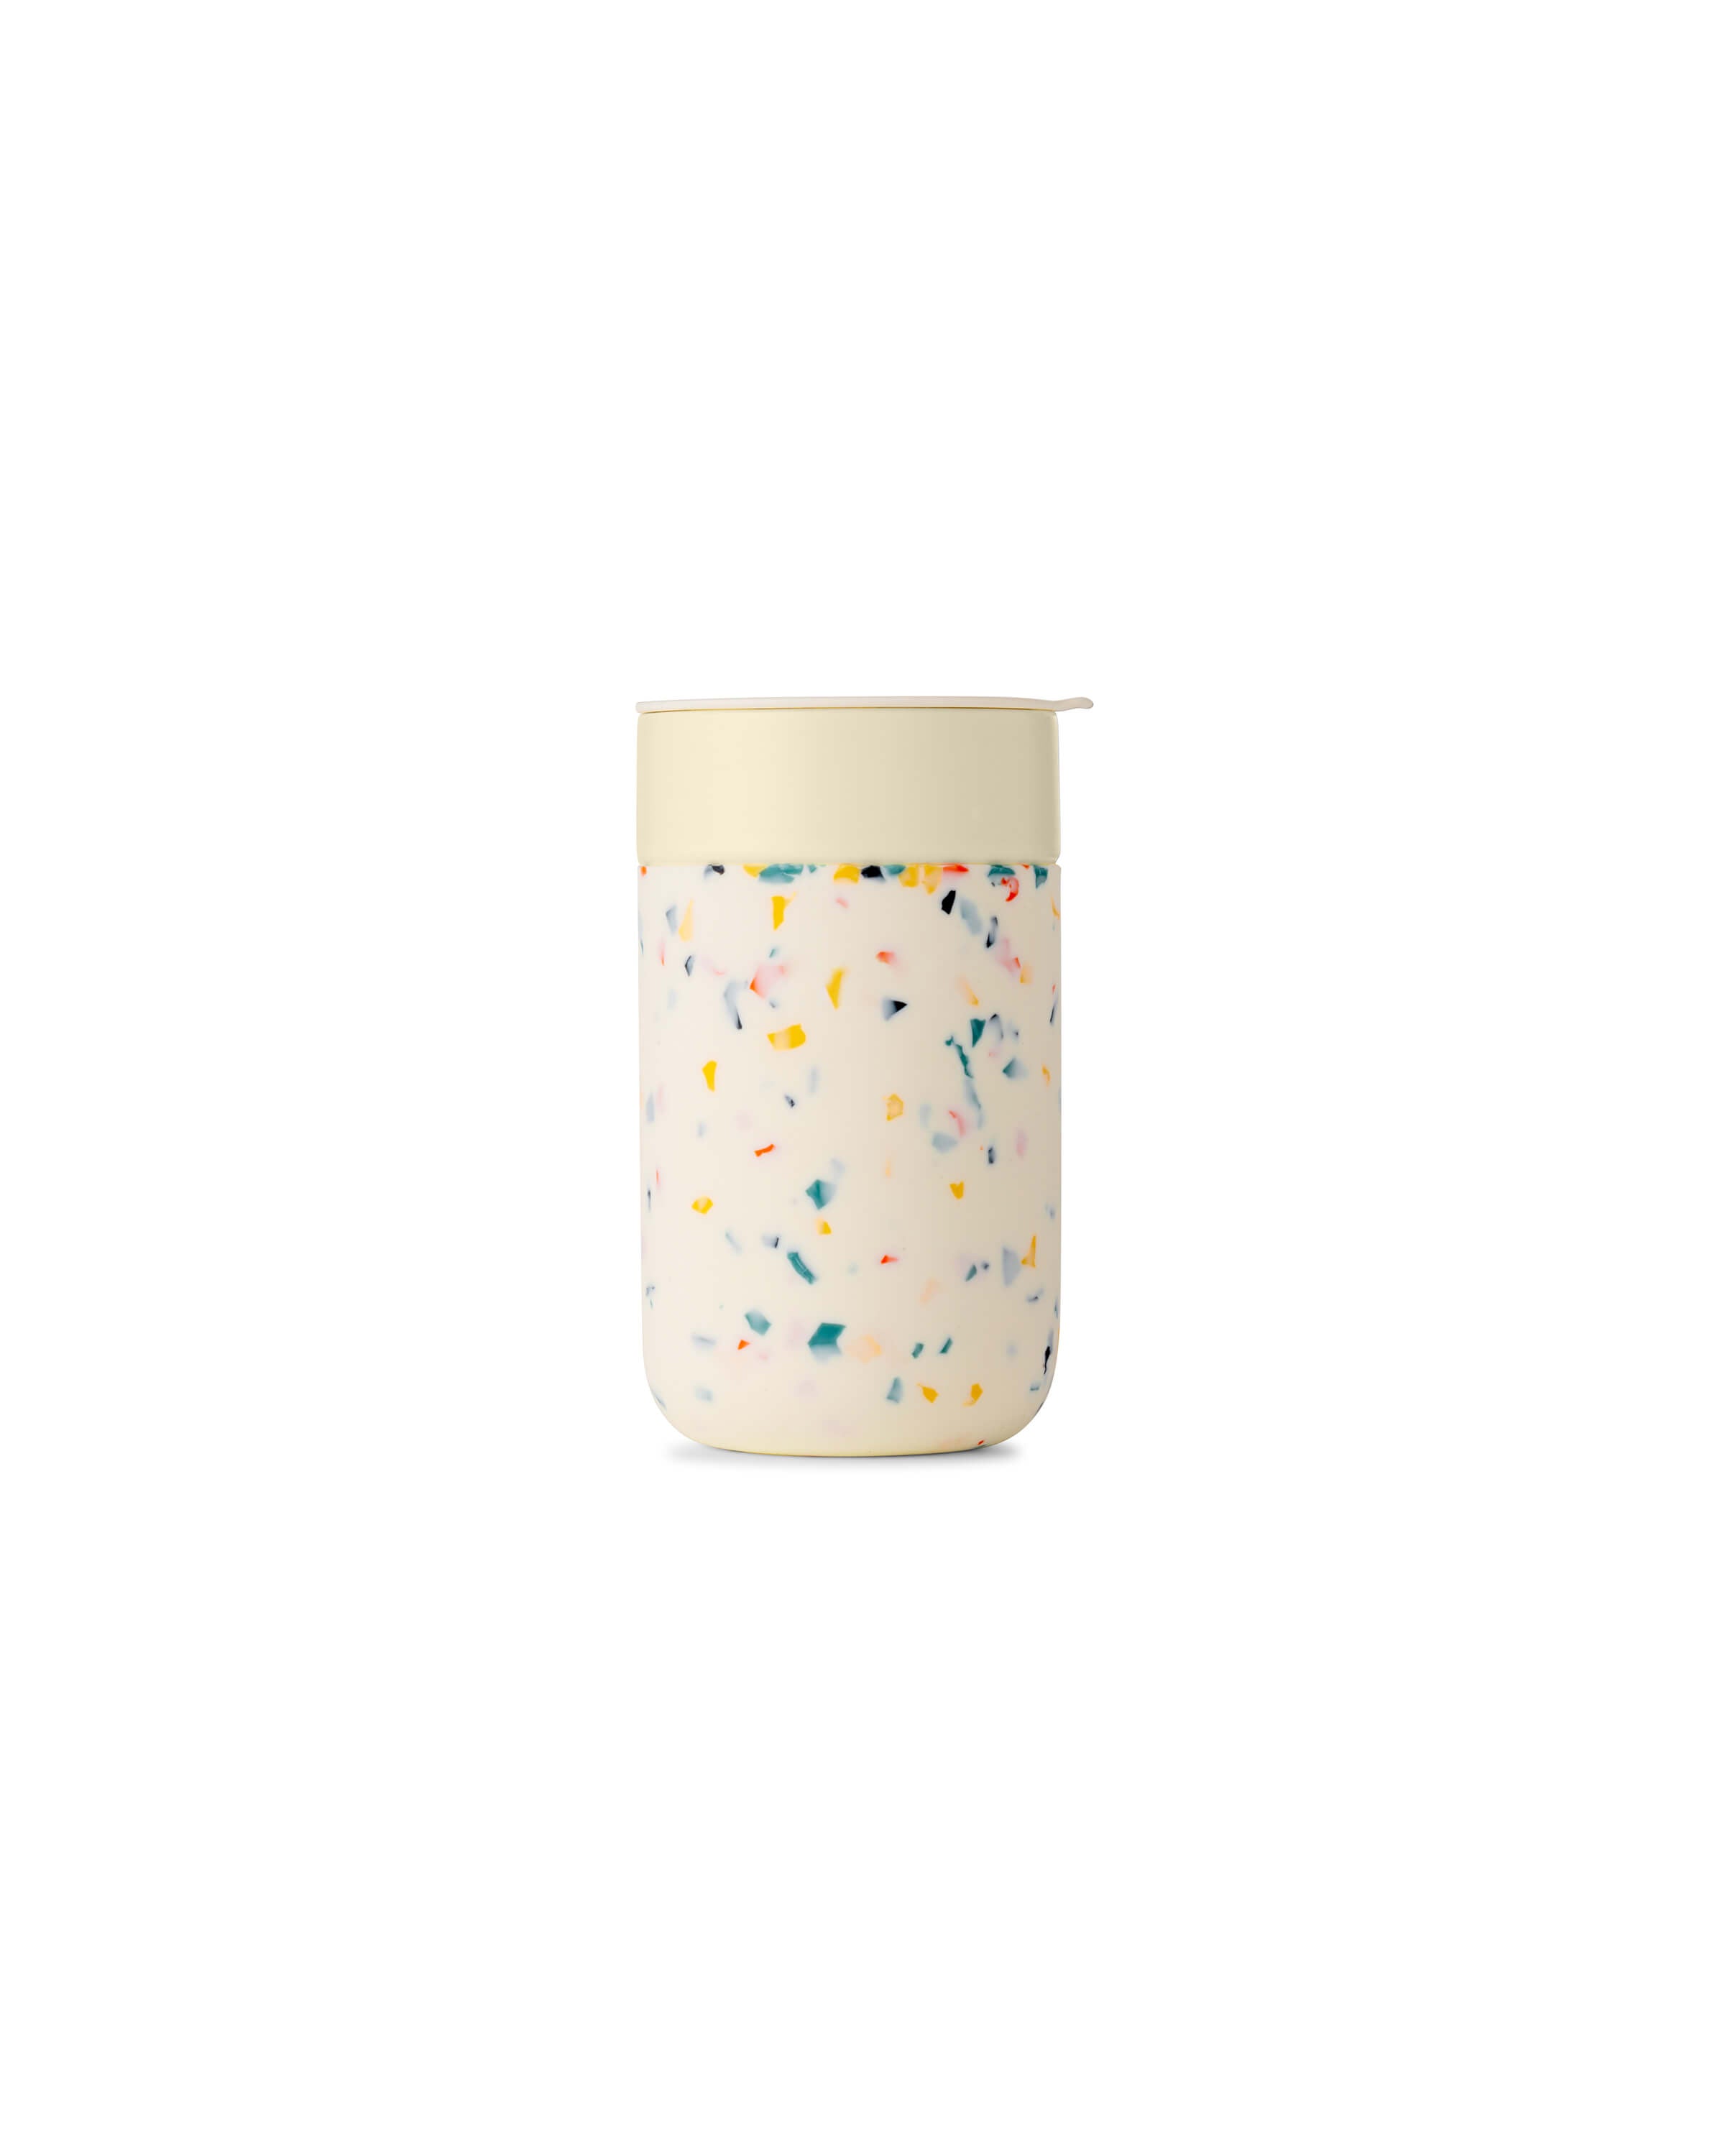 Porter Ceramic Mug in Blush Terrazzo by W&P – Gretel Home